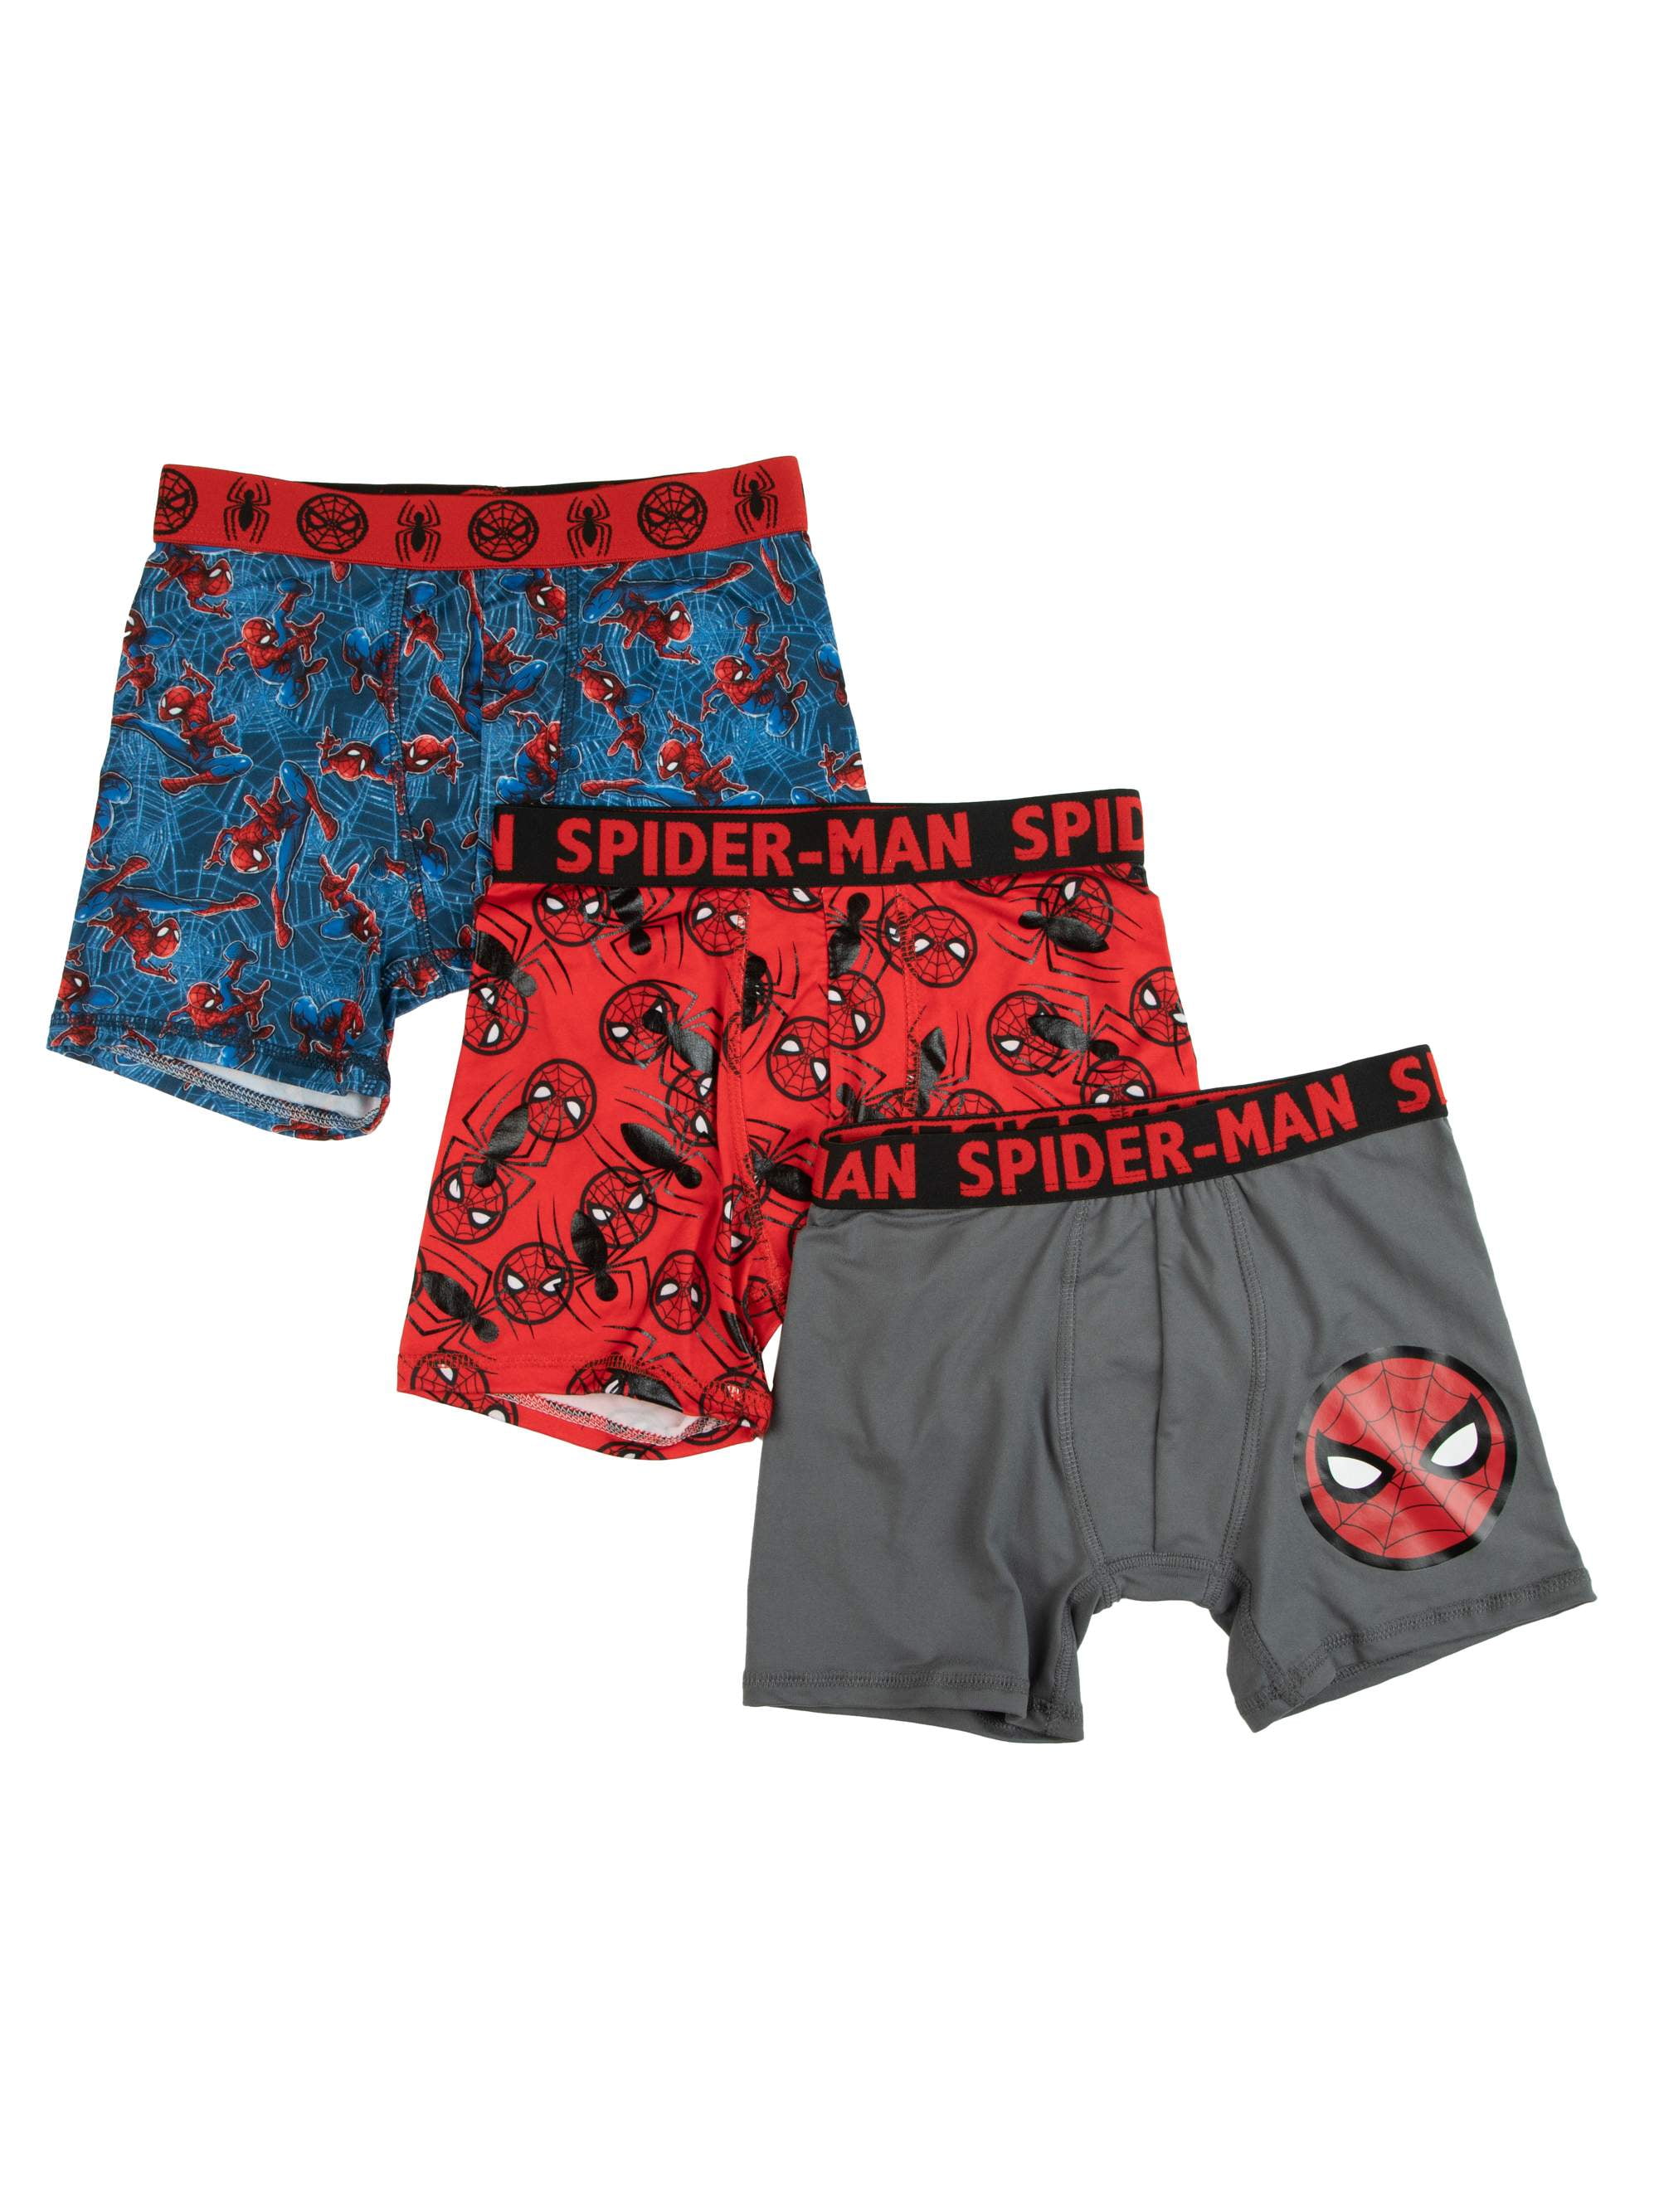 Boys New SPIDERMAN superhero Vest and Boxers Set Kids Underwear 2 PC Ages 4-10 